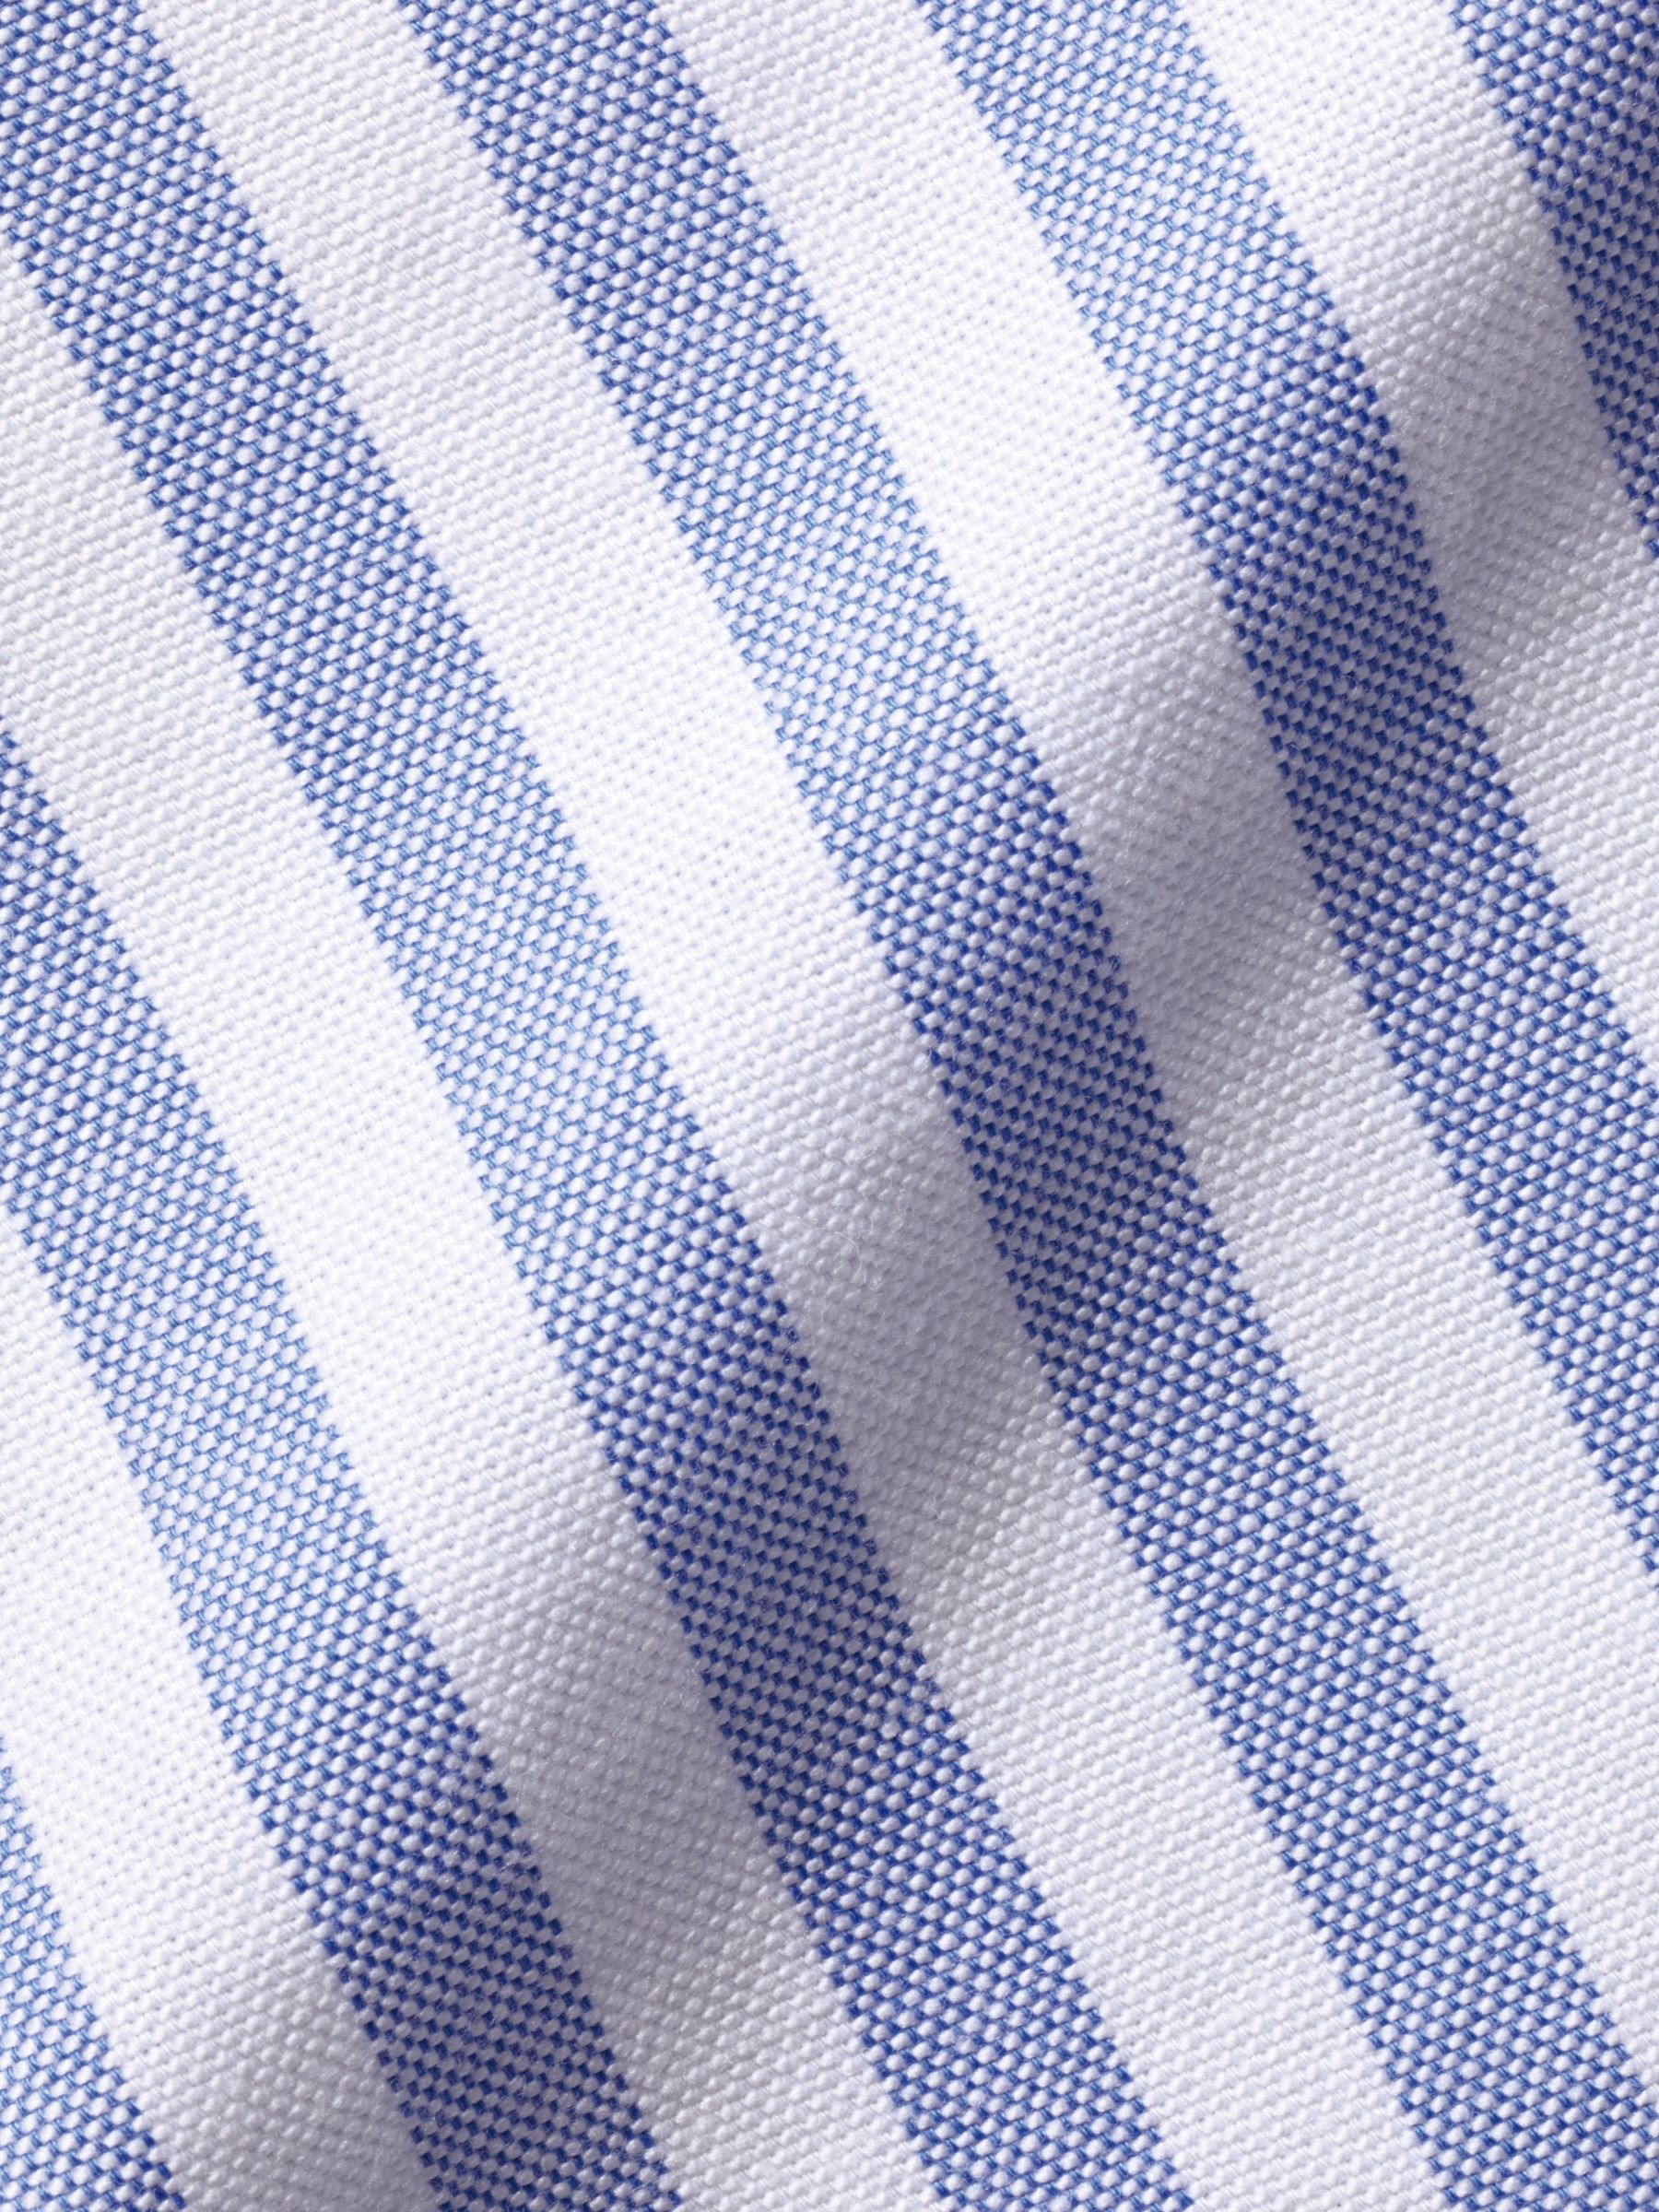 Charles Tyrwhitt Slim Fit Strip Patchwork Stretch Oxford Shirt, Ocean Blue, XL